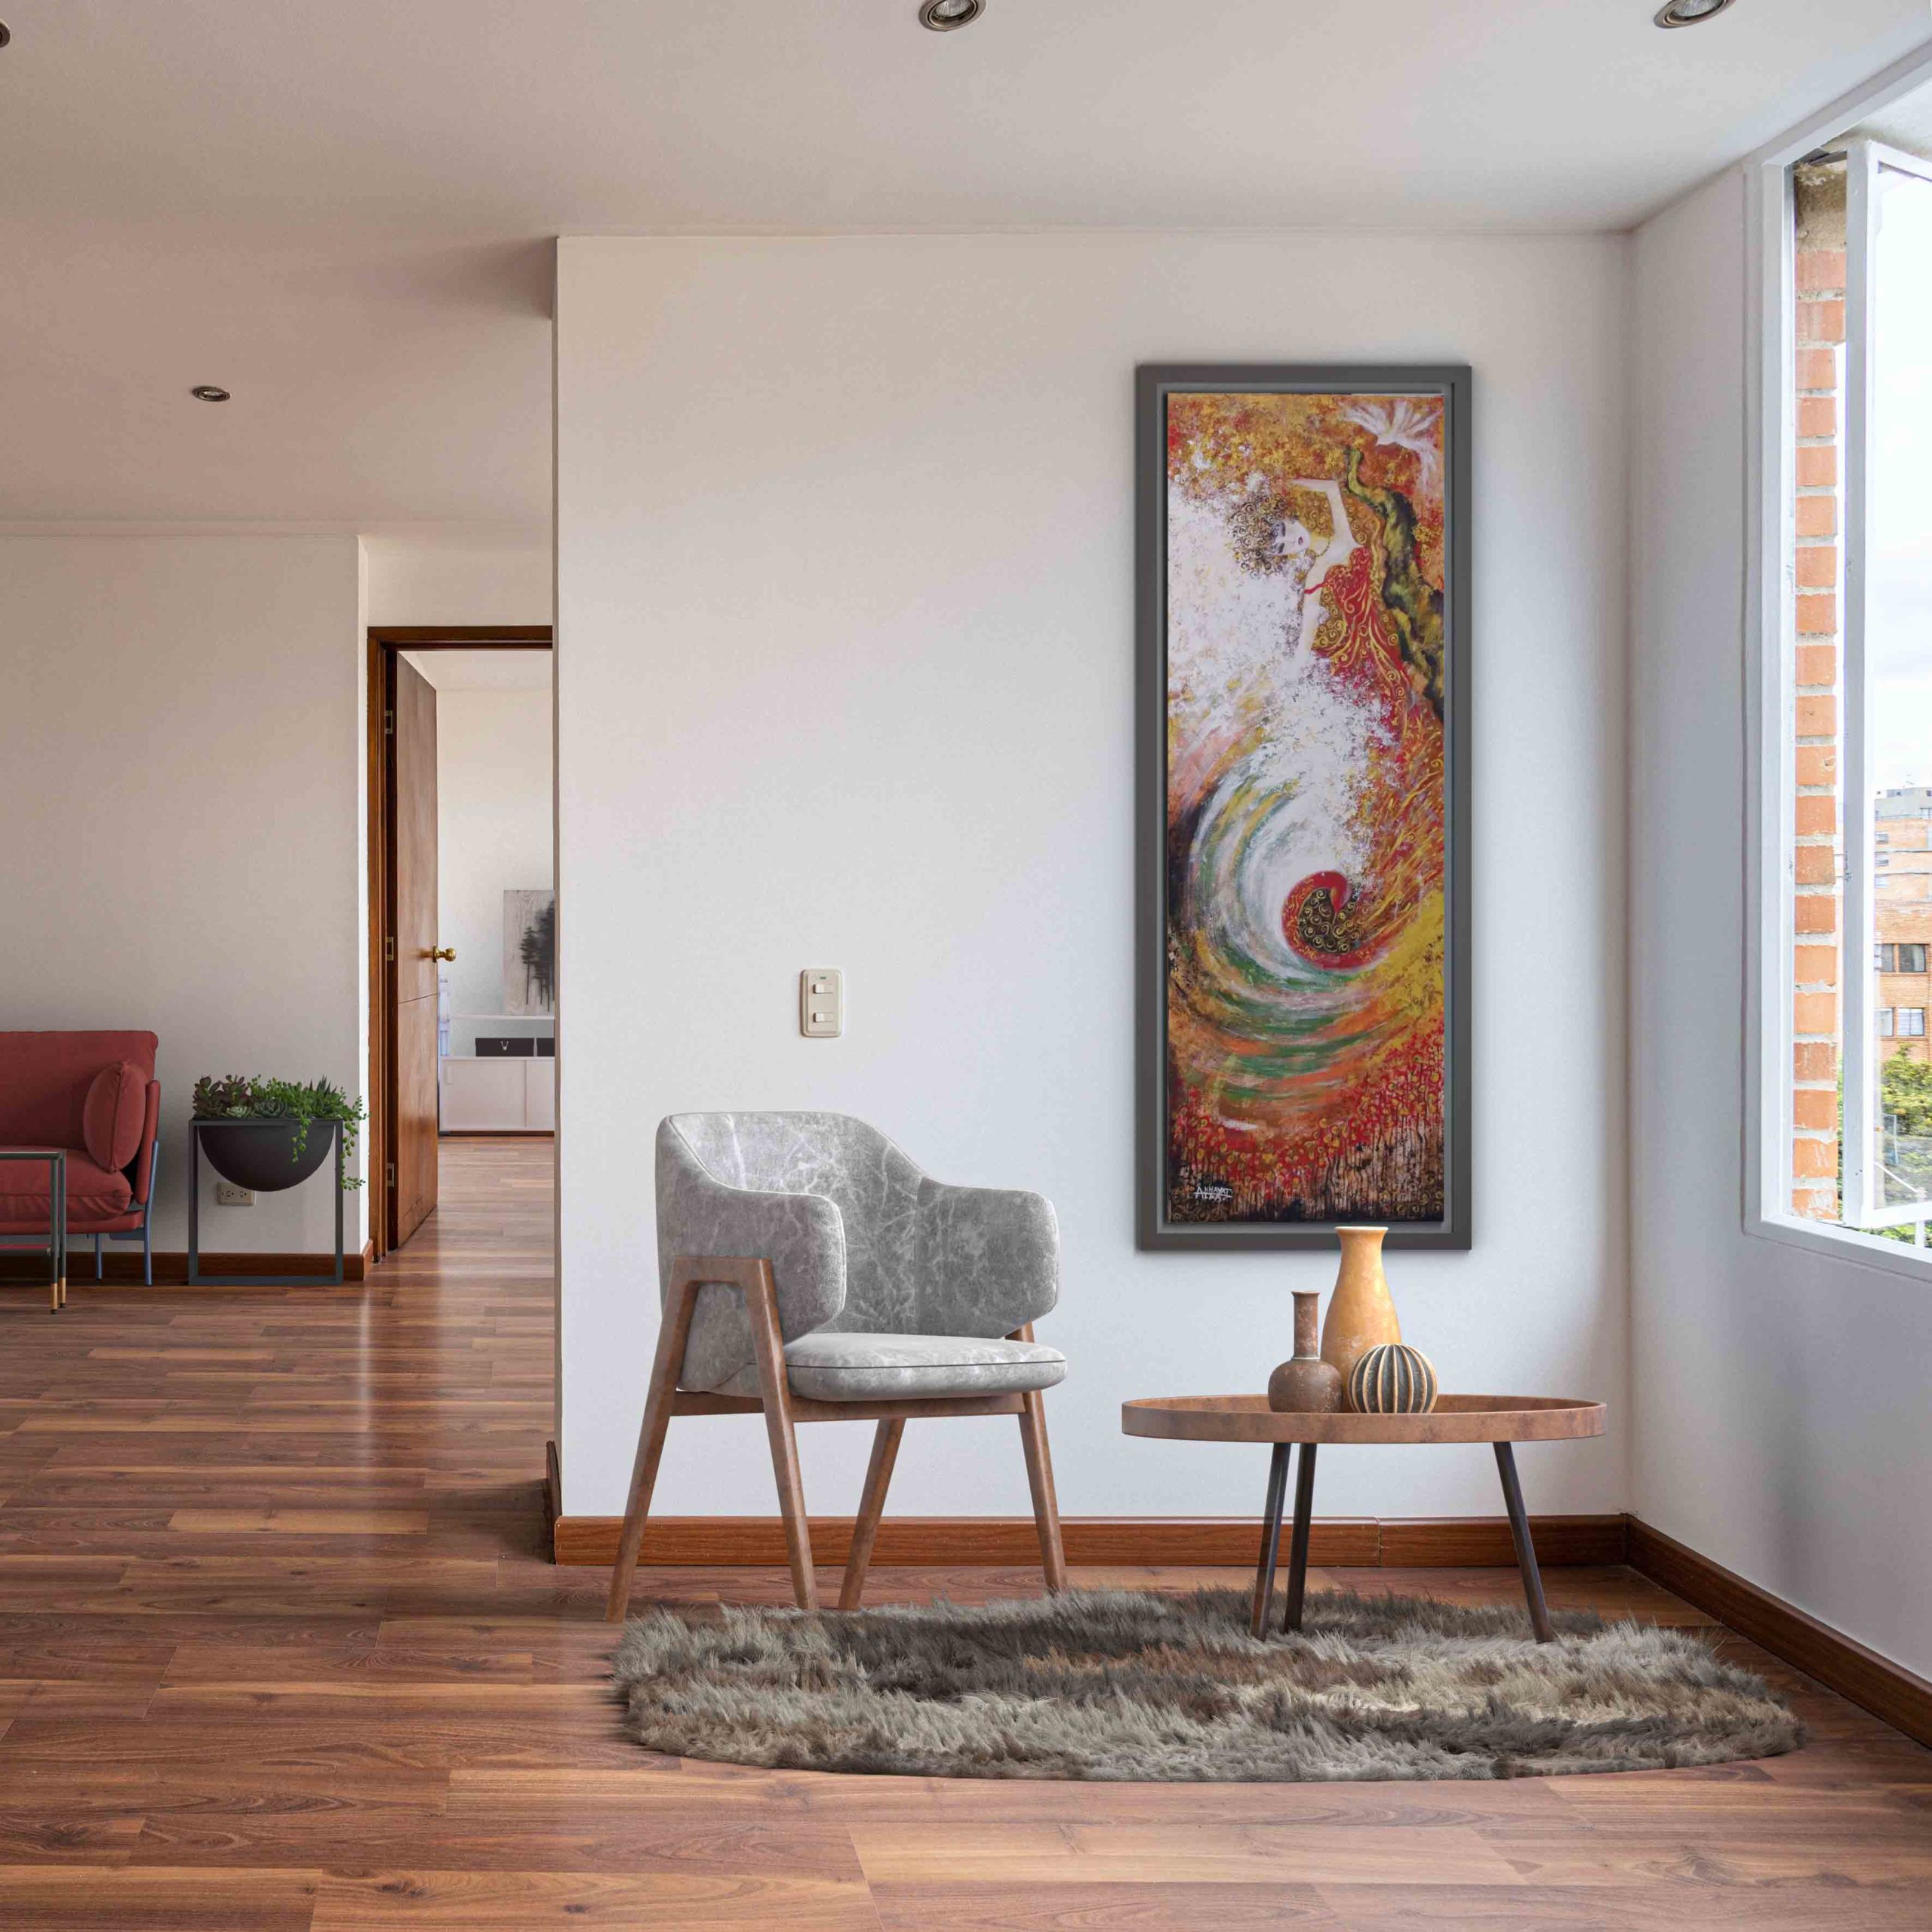 Home-staging-virtuel-interieur-apres